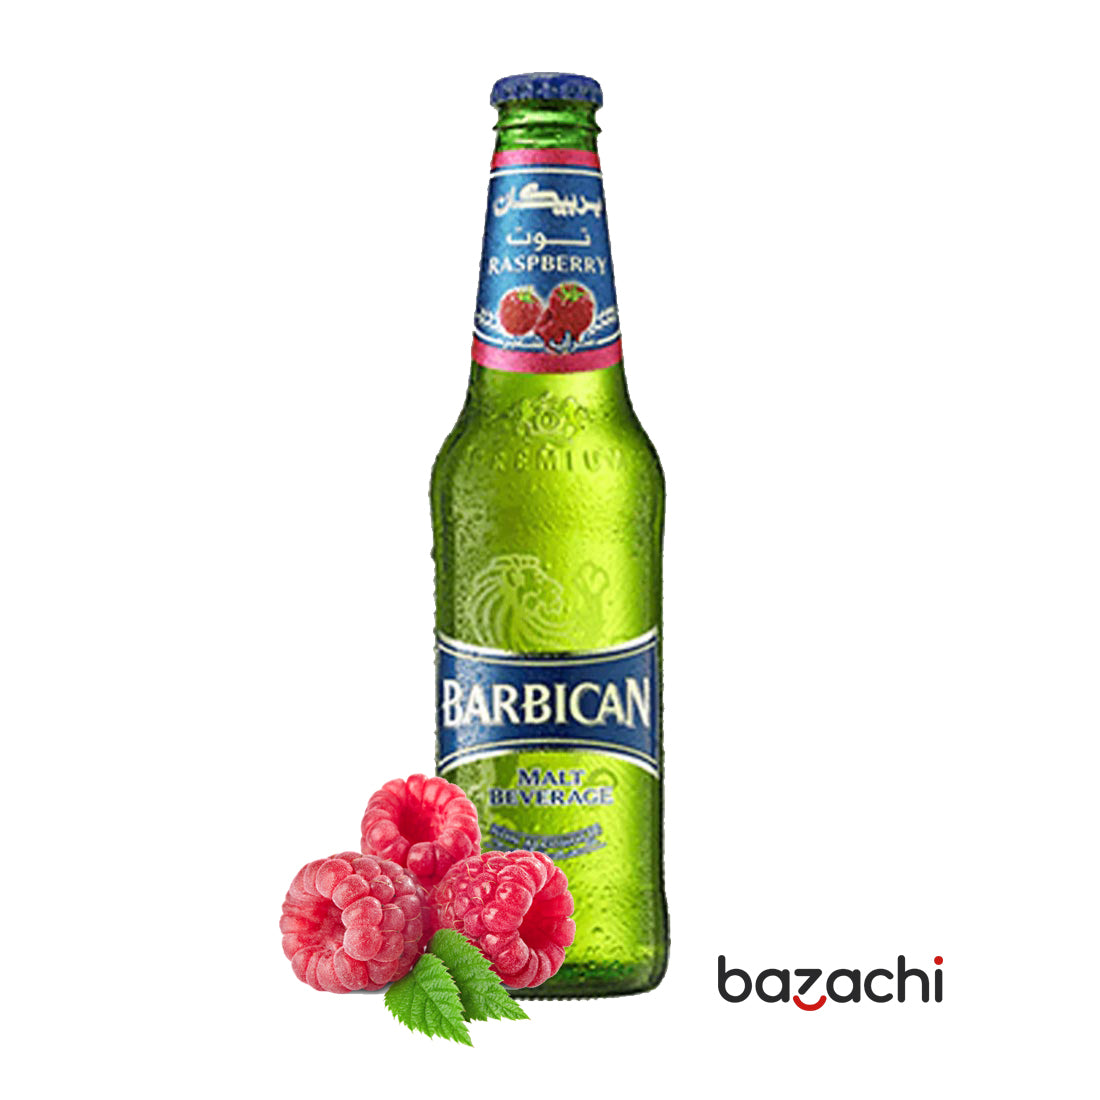 Barbican Raspberry Flavored Malt Drink  330ml